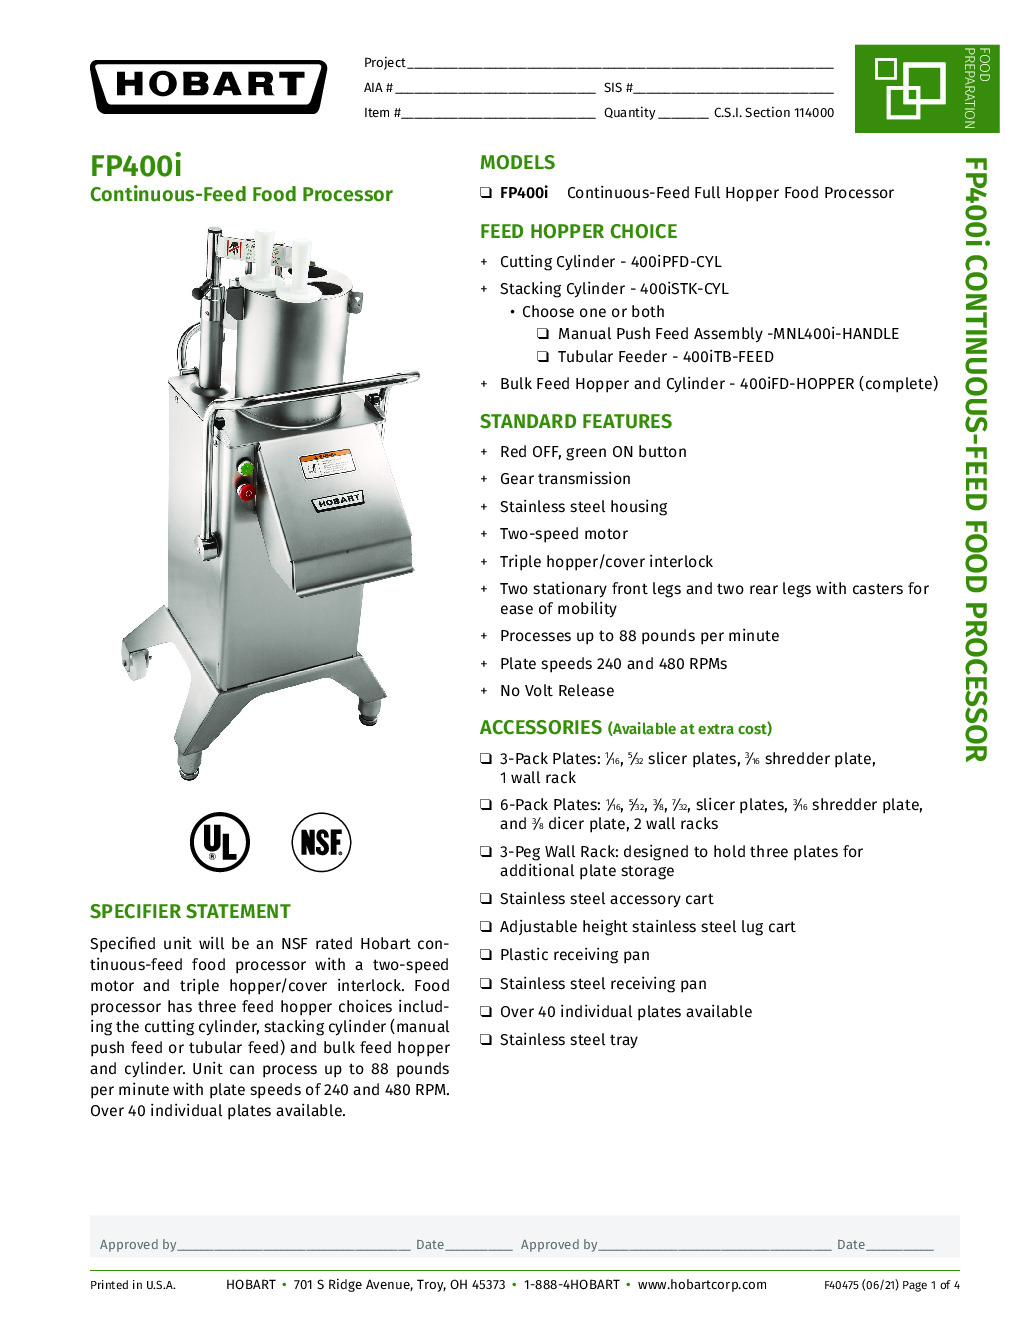 Hobart FP400I-1 Continuous Feed Food Processor, 88 Ib. Production Per Minute, 208-240v/60/3-ph